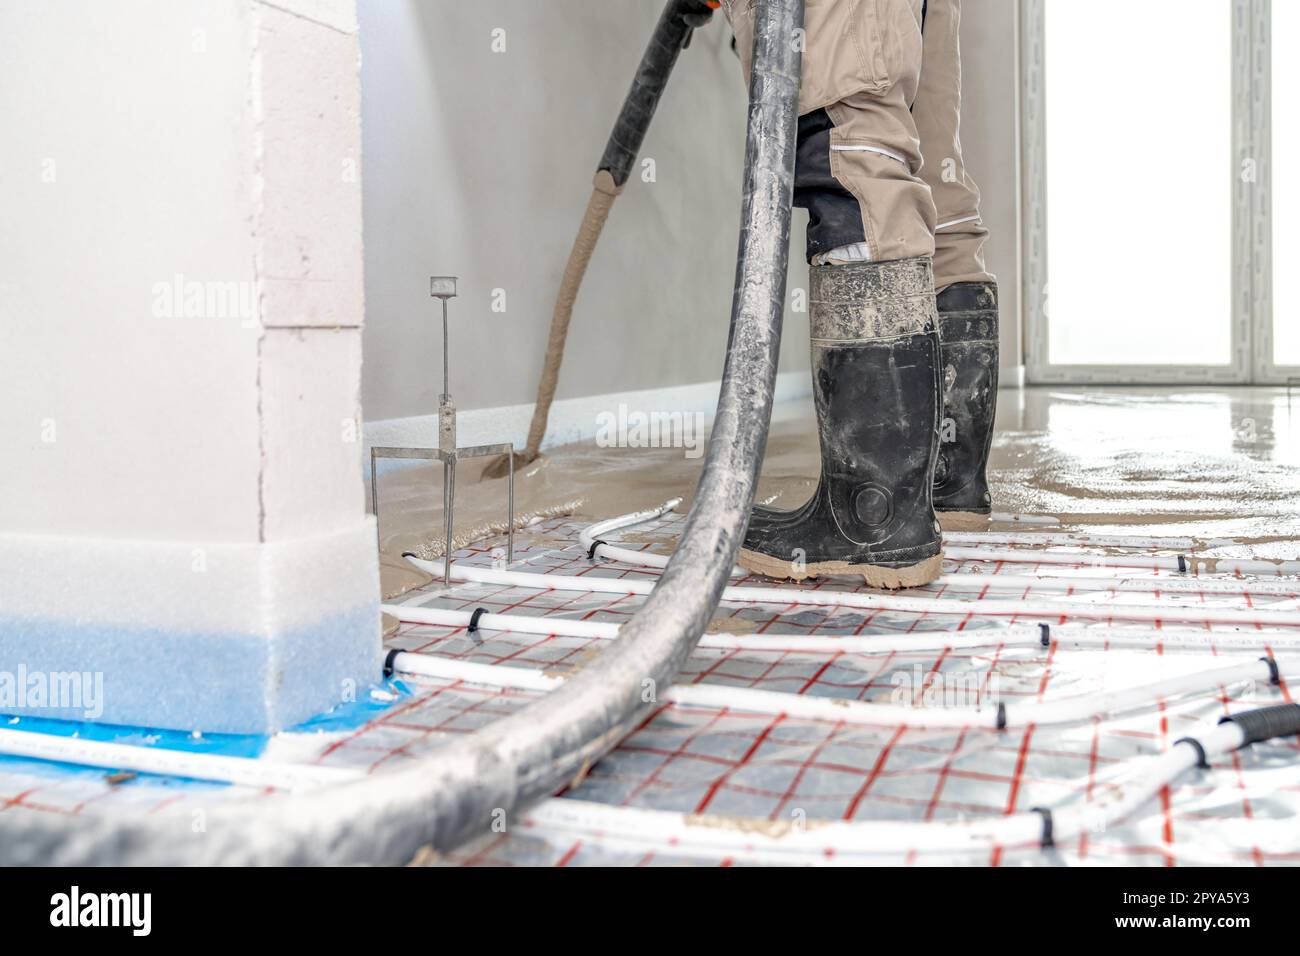 installation of liquid concrete on the floor for underfloor heating Stock Photo